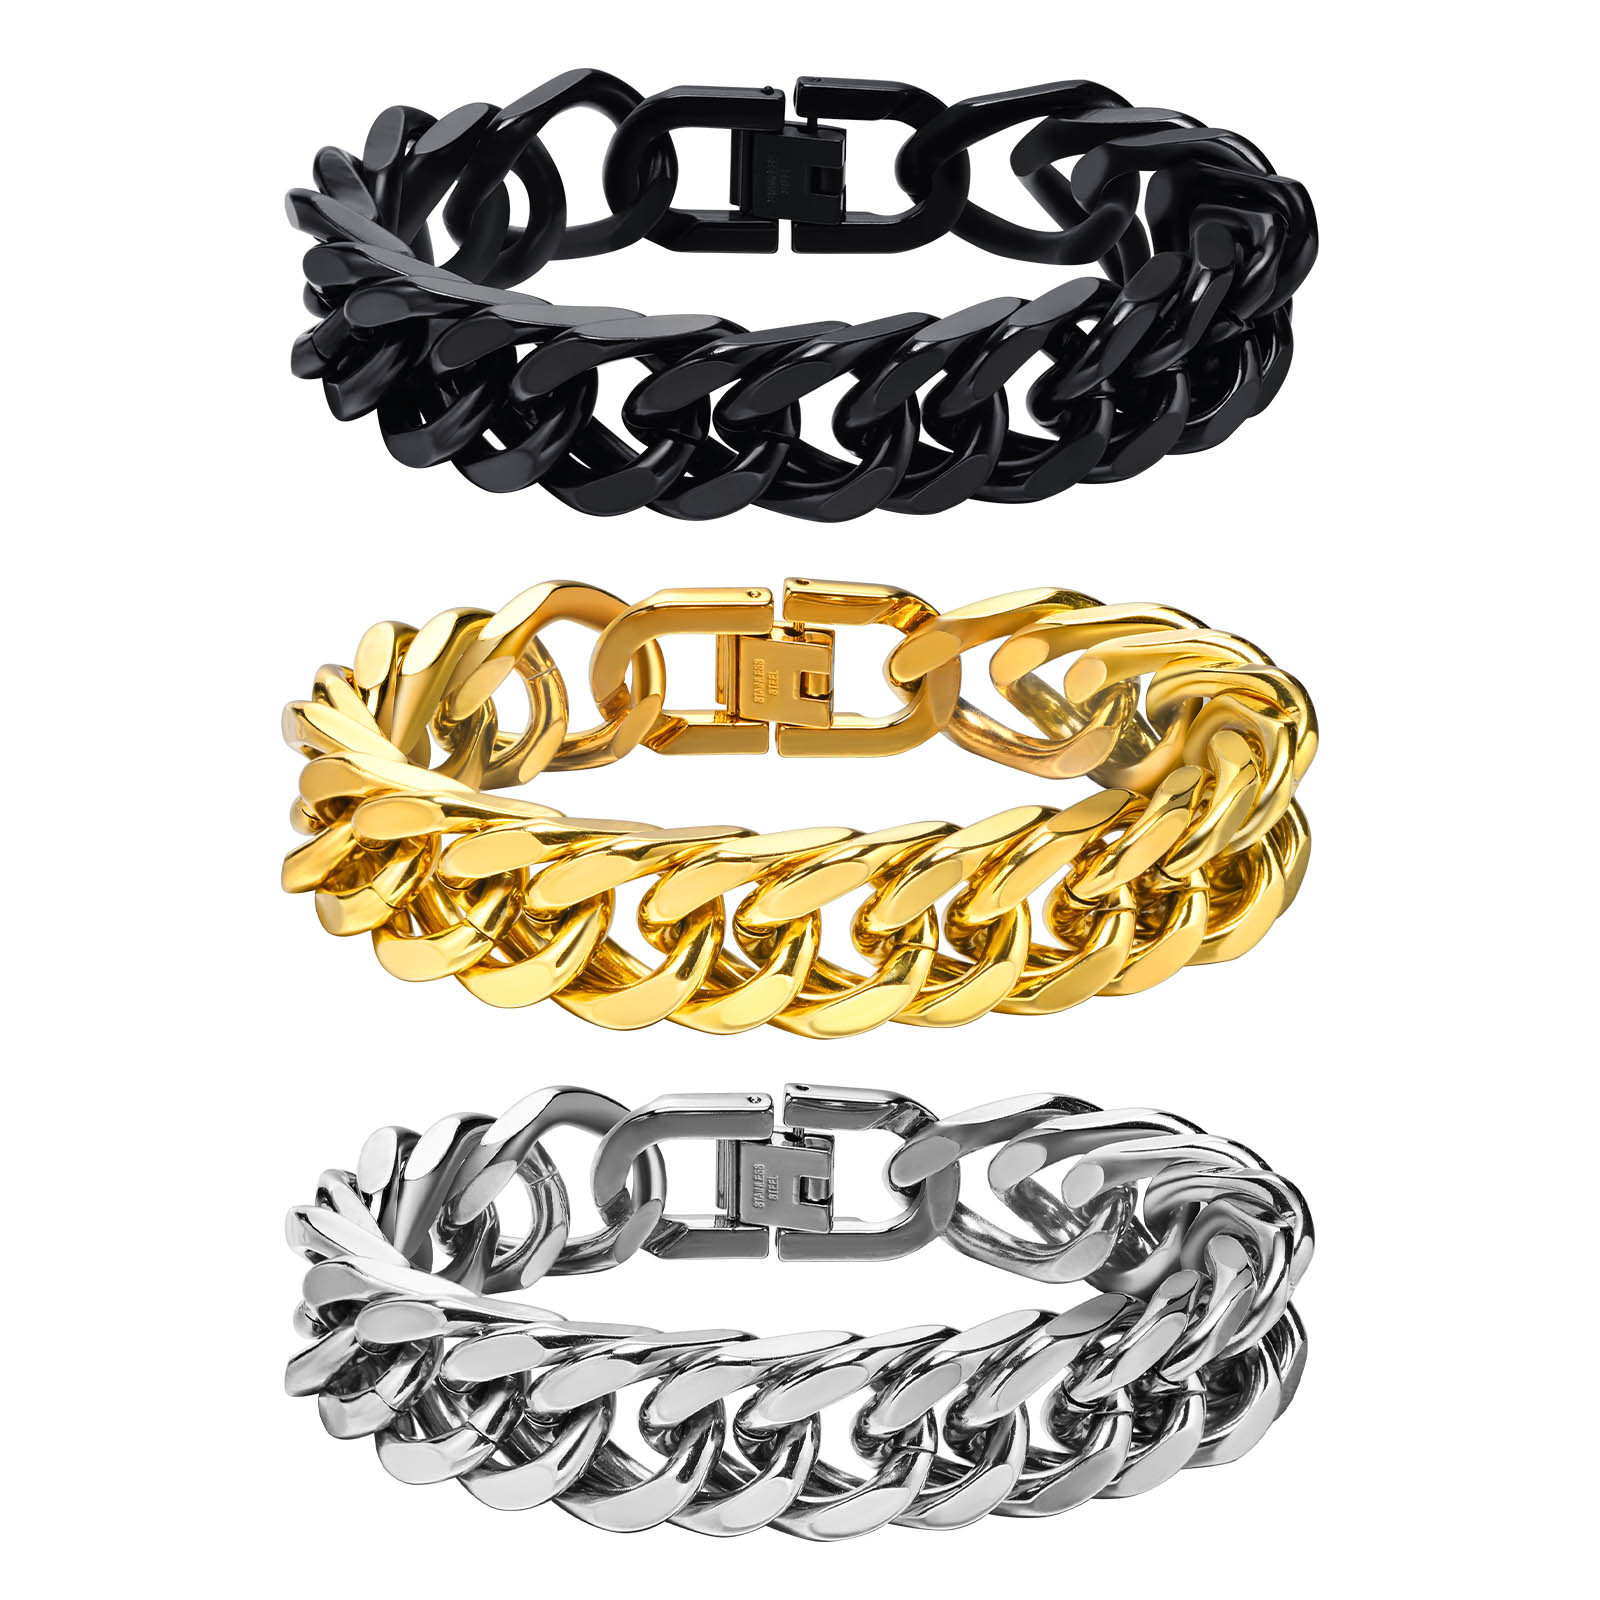 1:Black chain width 15MM; bracelet total length 19CM